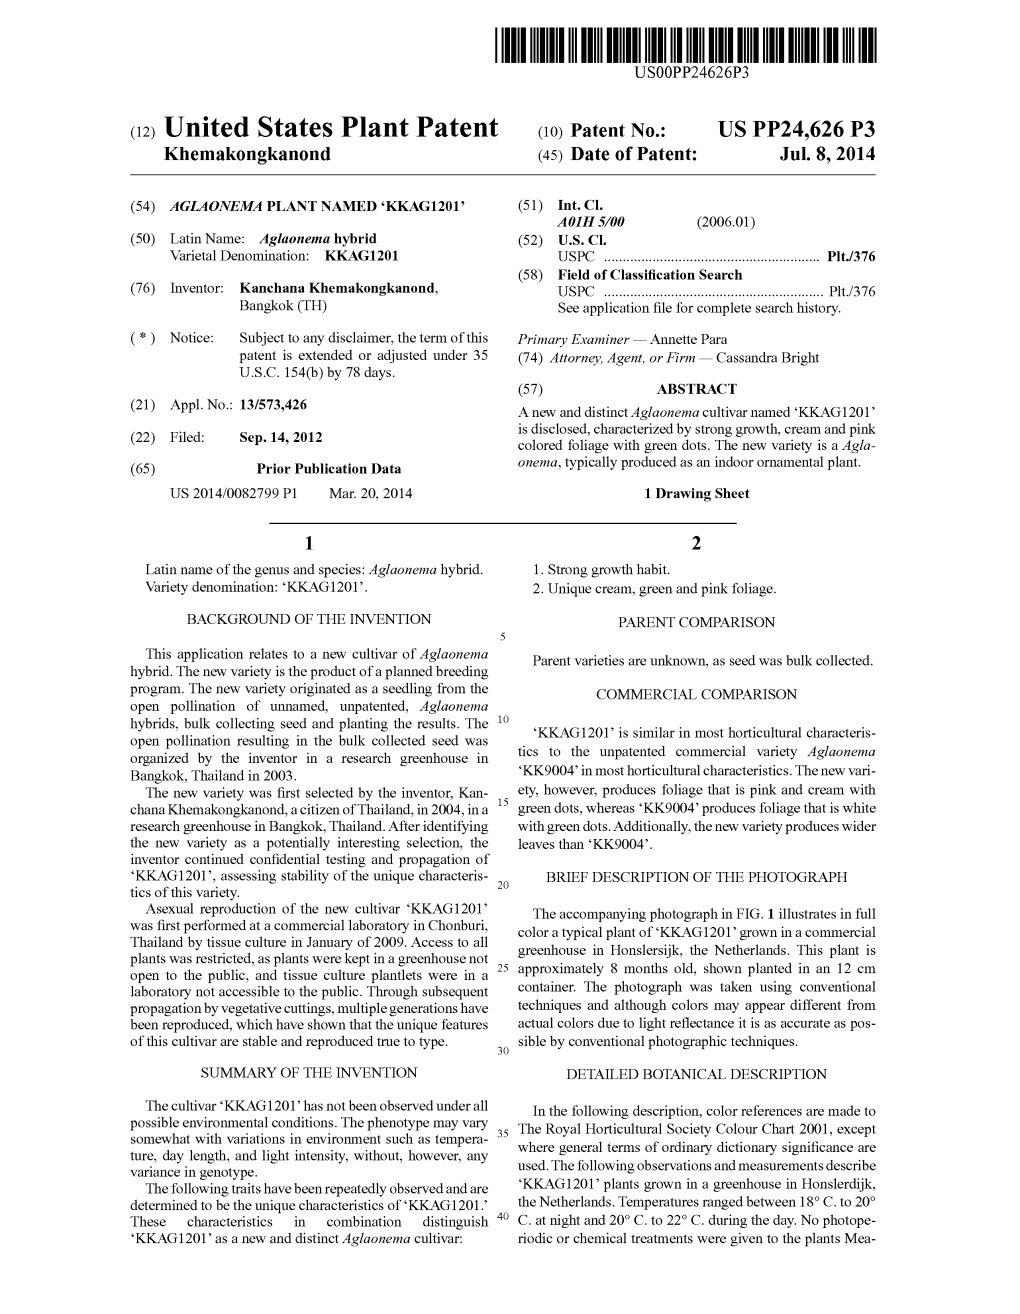 (12) United States Plant Patent (10) Patent N0.: US PP24,626 P3 Khemakongkanond (45) Date of Patent: Jul